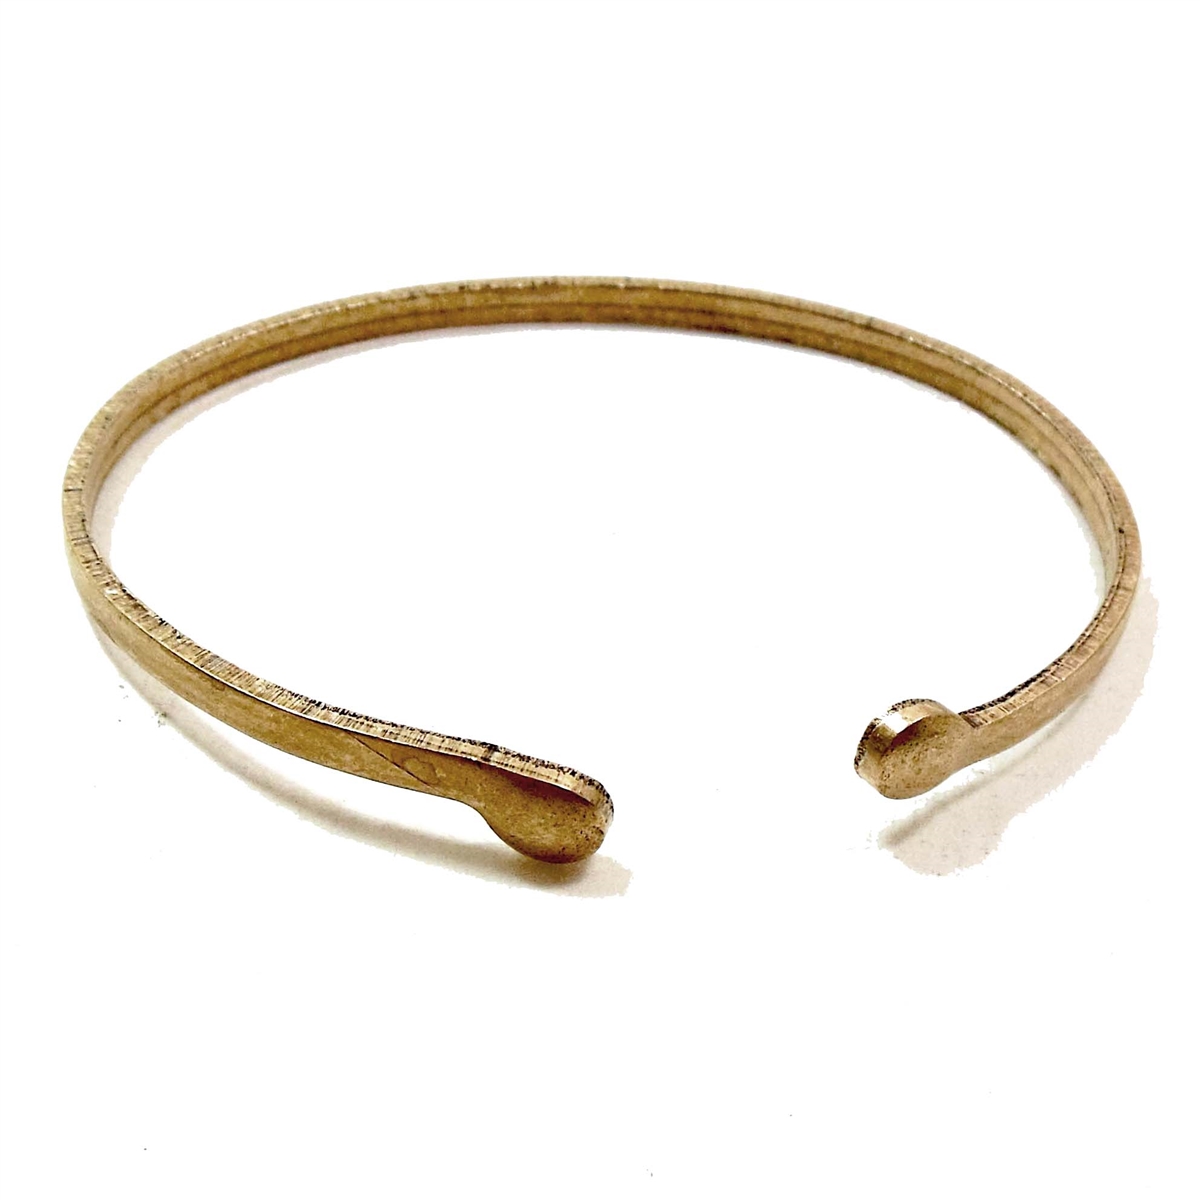 Cuff Brass Bracelet w/ Flattened Ends - Parawire